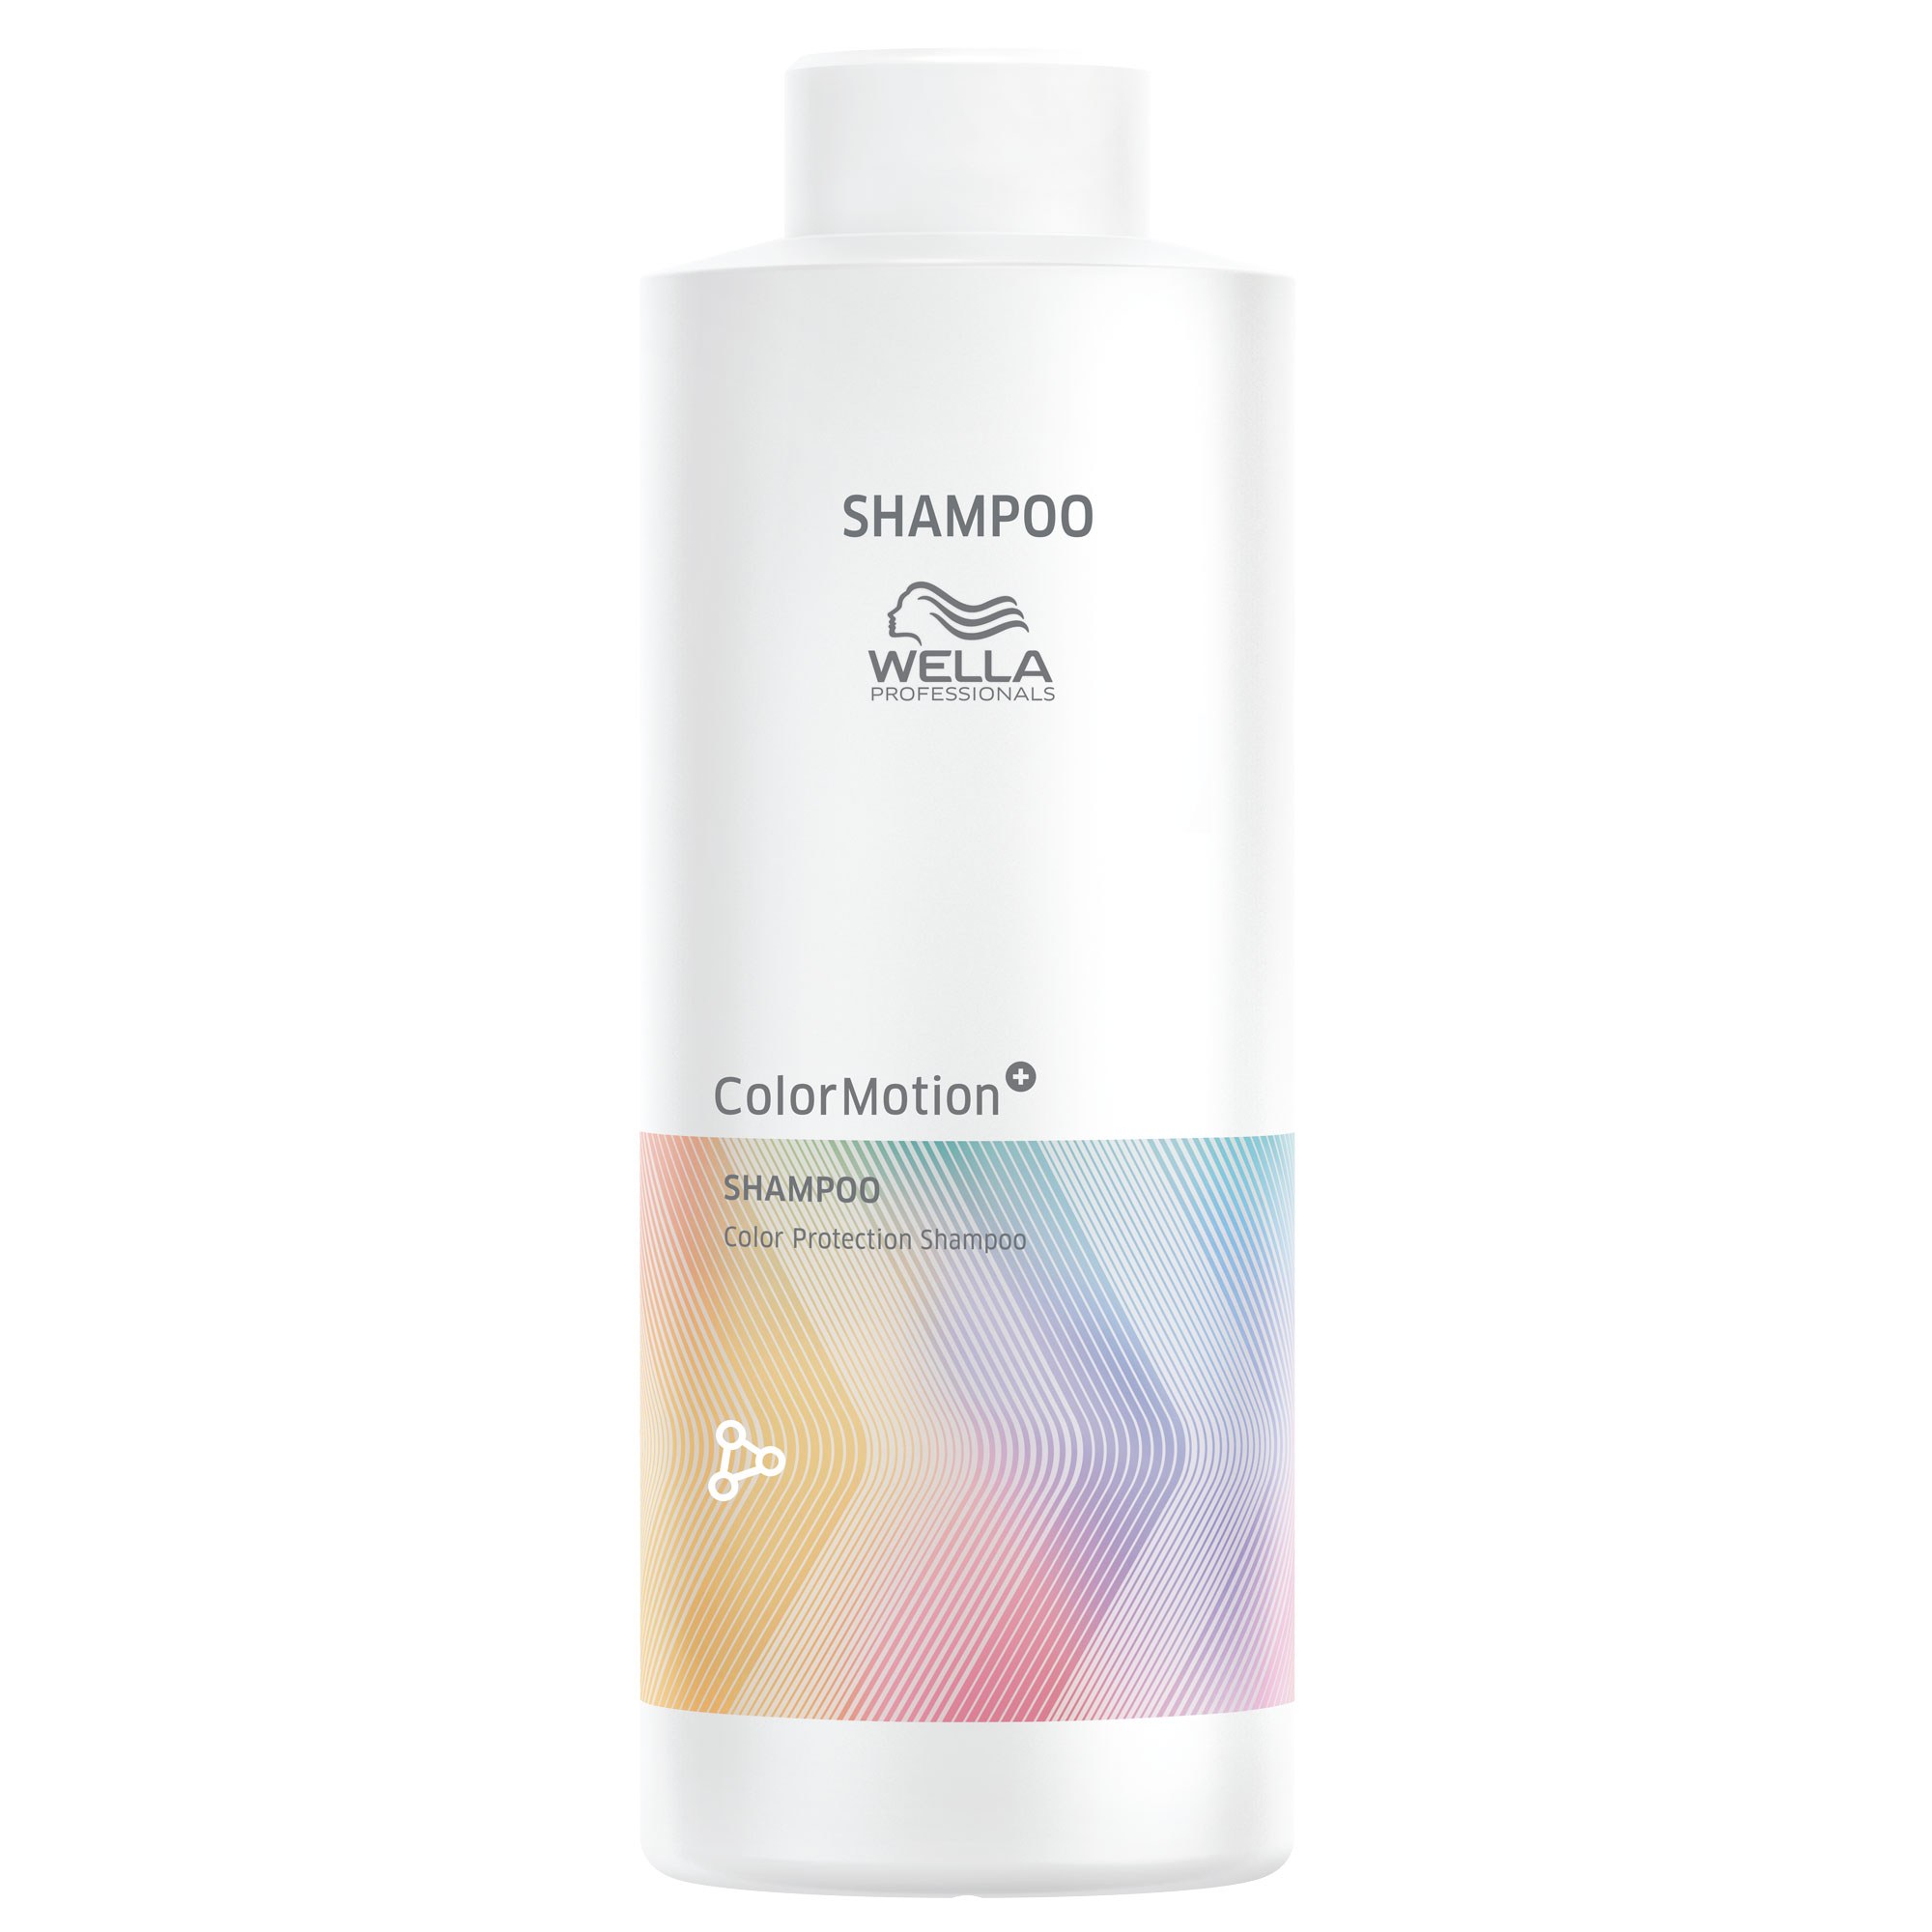 Wella ColorMotion+ Shampoo